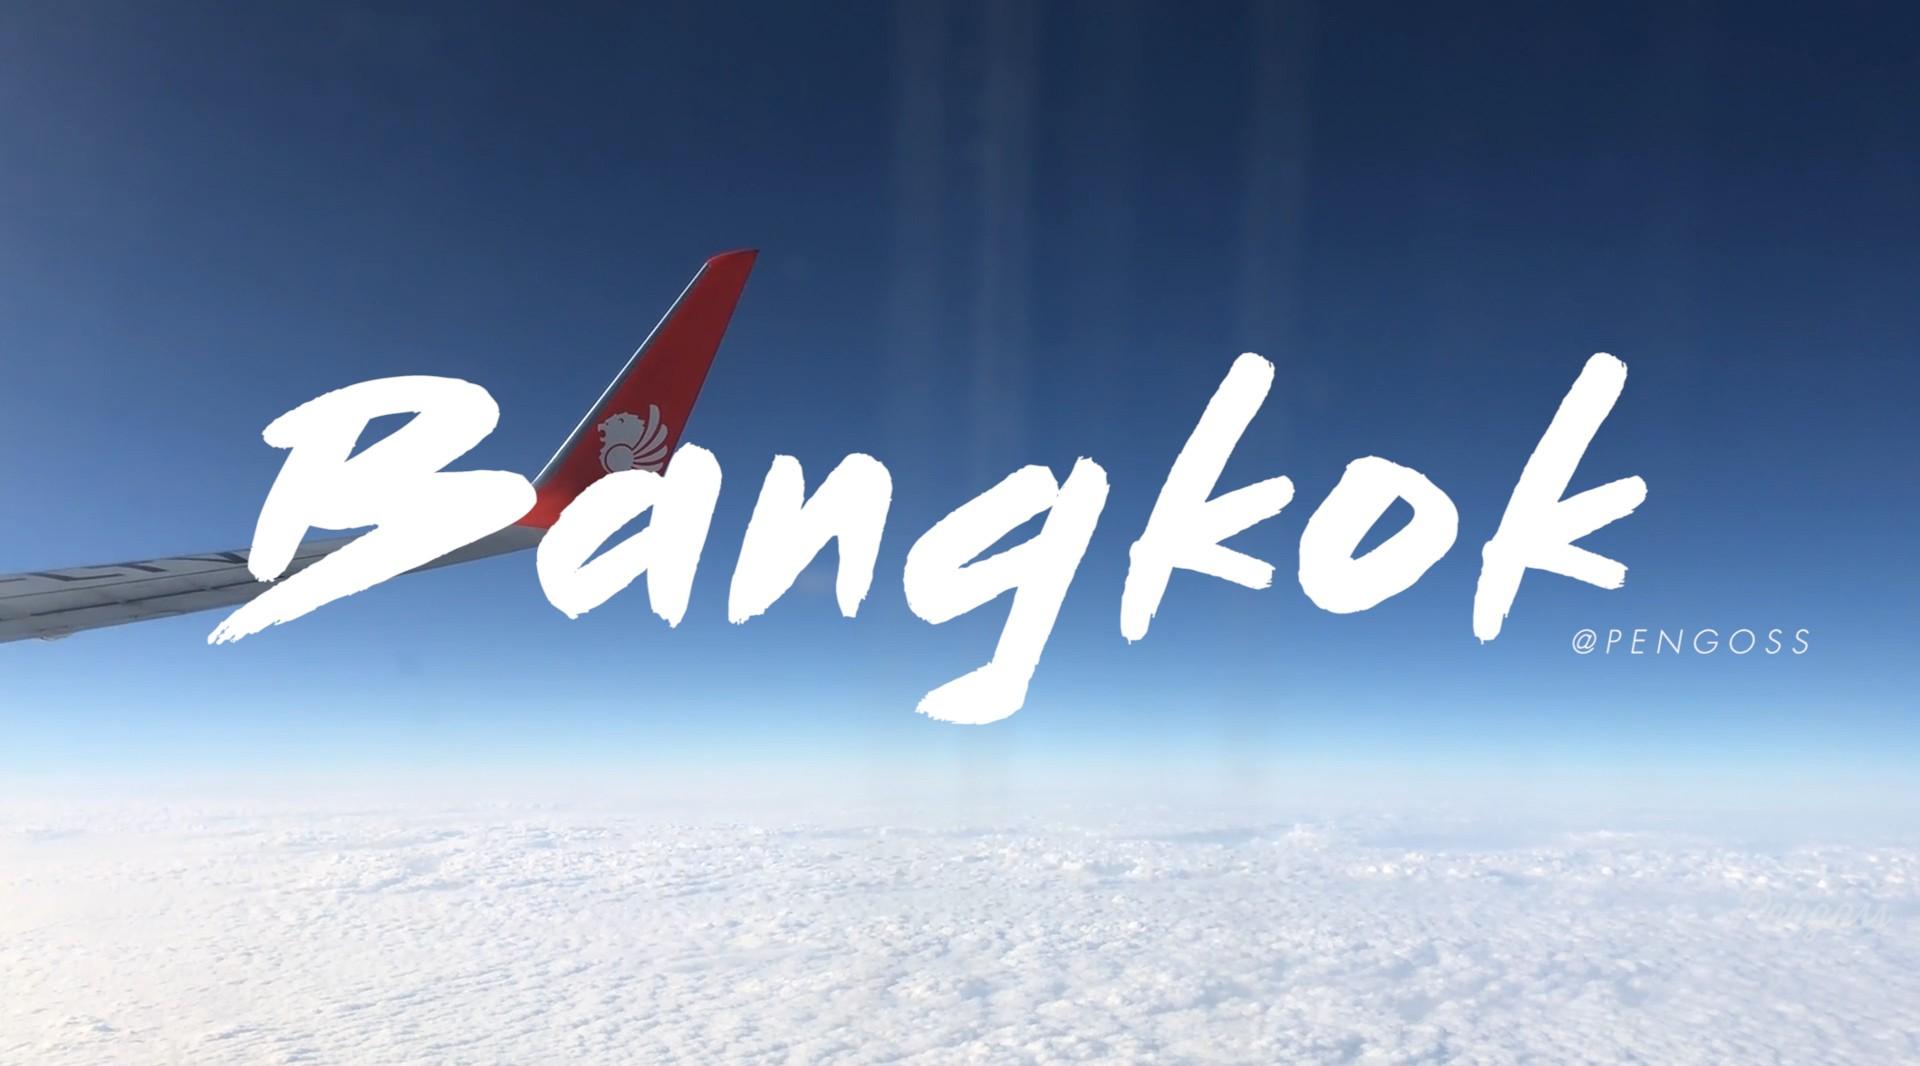 「VLOG」曼谷 | (Bangkok Thailand & Pengoss)-Travel Film